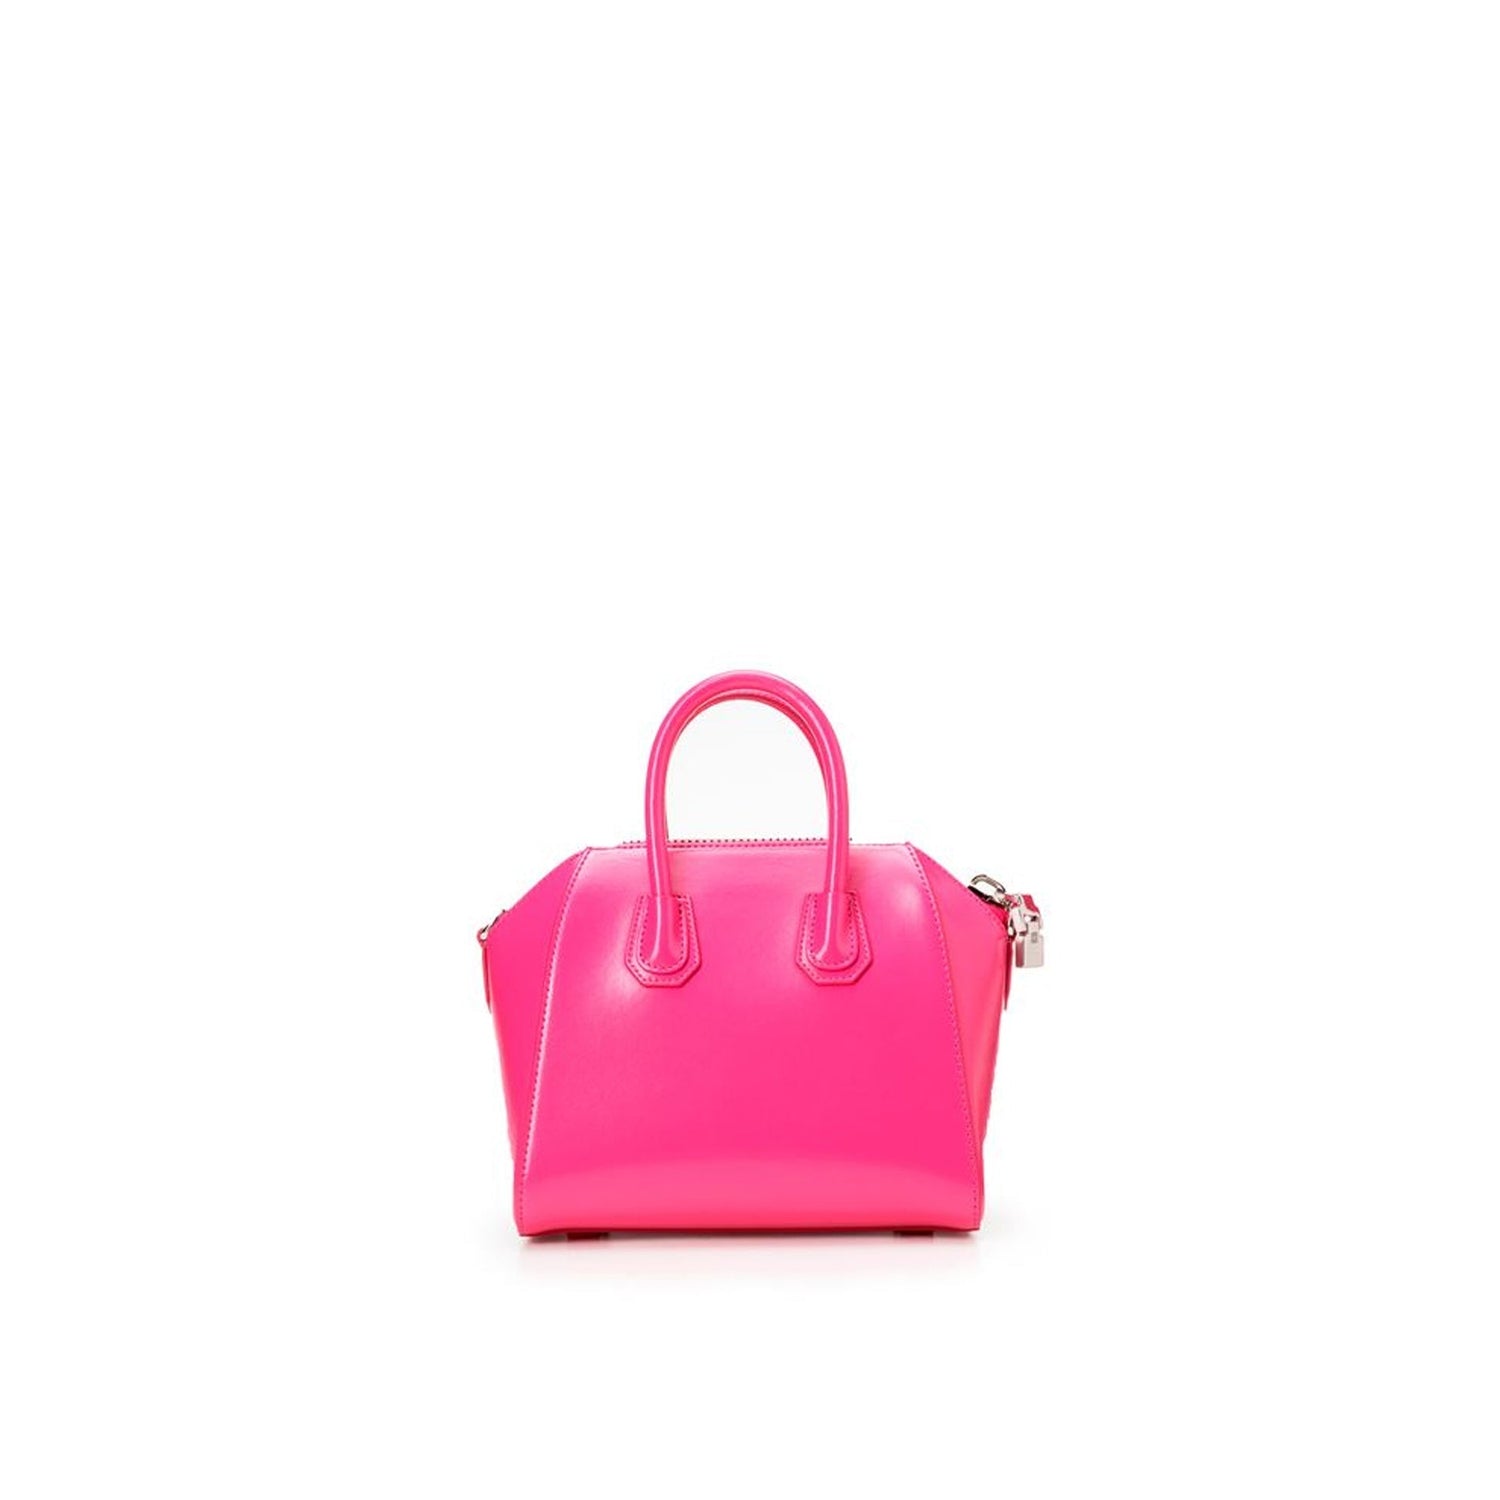 Givenchy Women's Mini Antigona Bag in Box Leather - Neon Pink One-Size